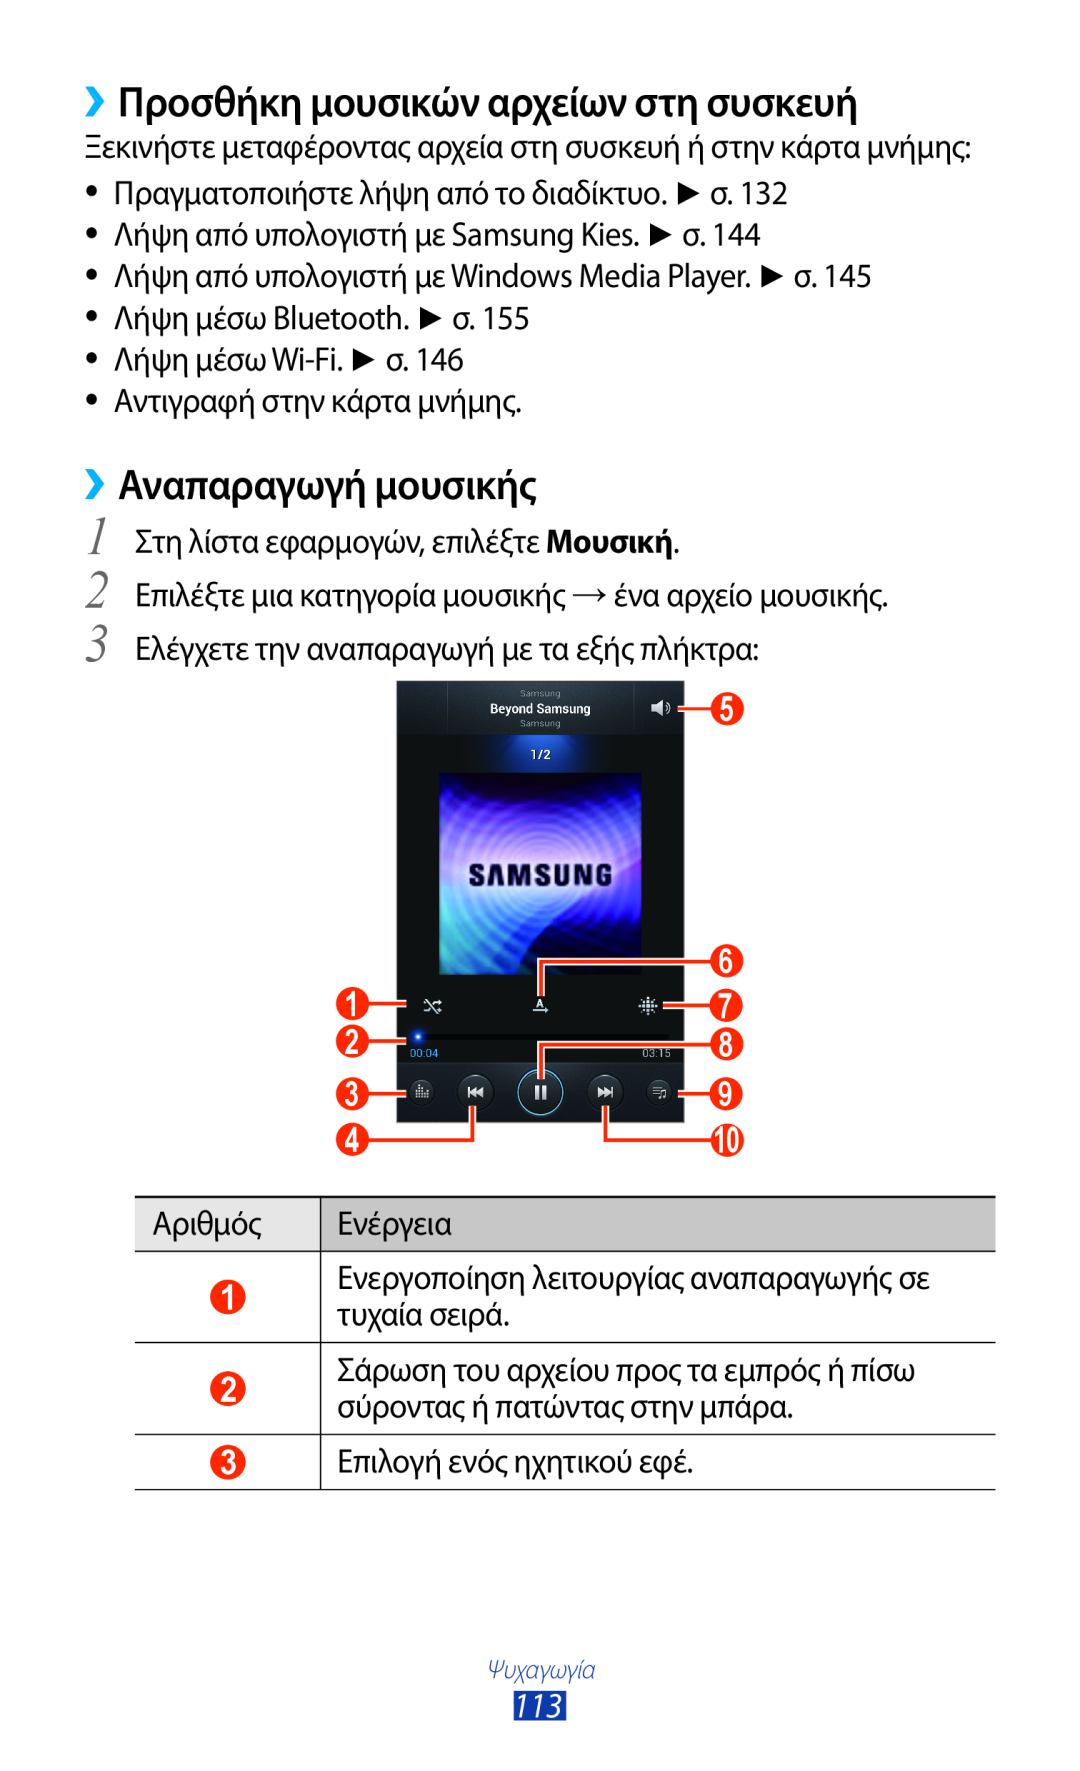 Samsung GT-N7000ZBEEUR, GT-N7000ZBAEUR, GT-N7000RWAEUR manual ››Προσθήκη μουσικών αρχείων στη συσκευή, ››Αναπαραγωγή μουσικής 